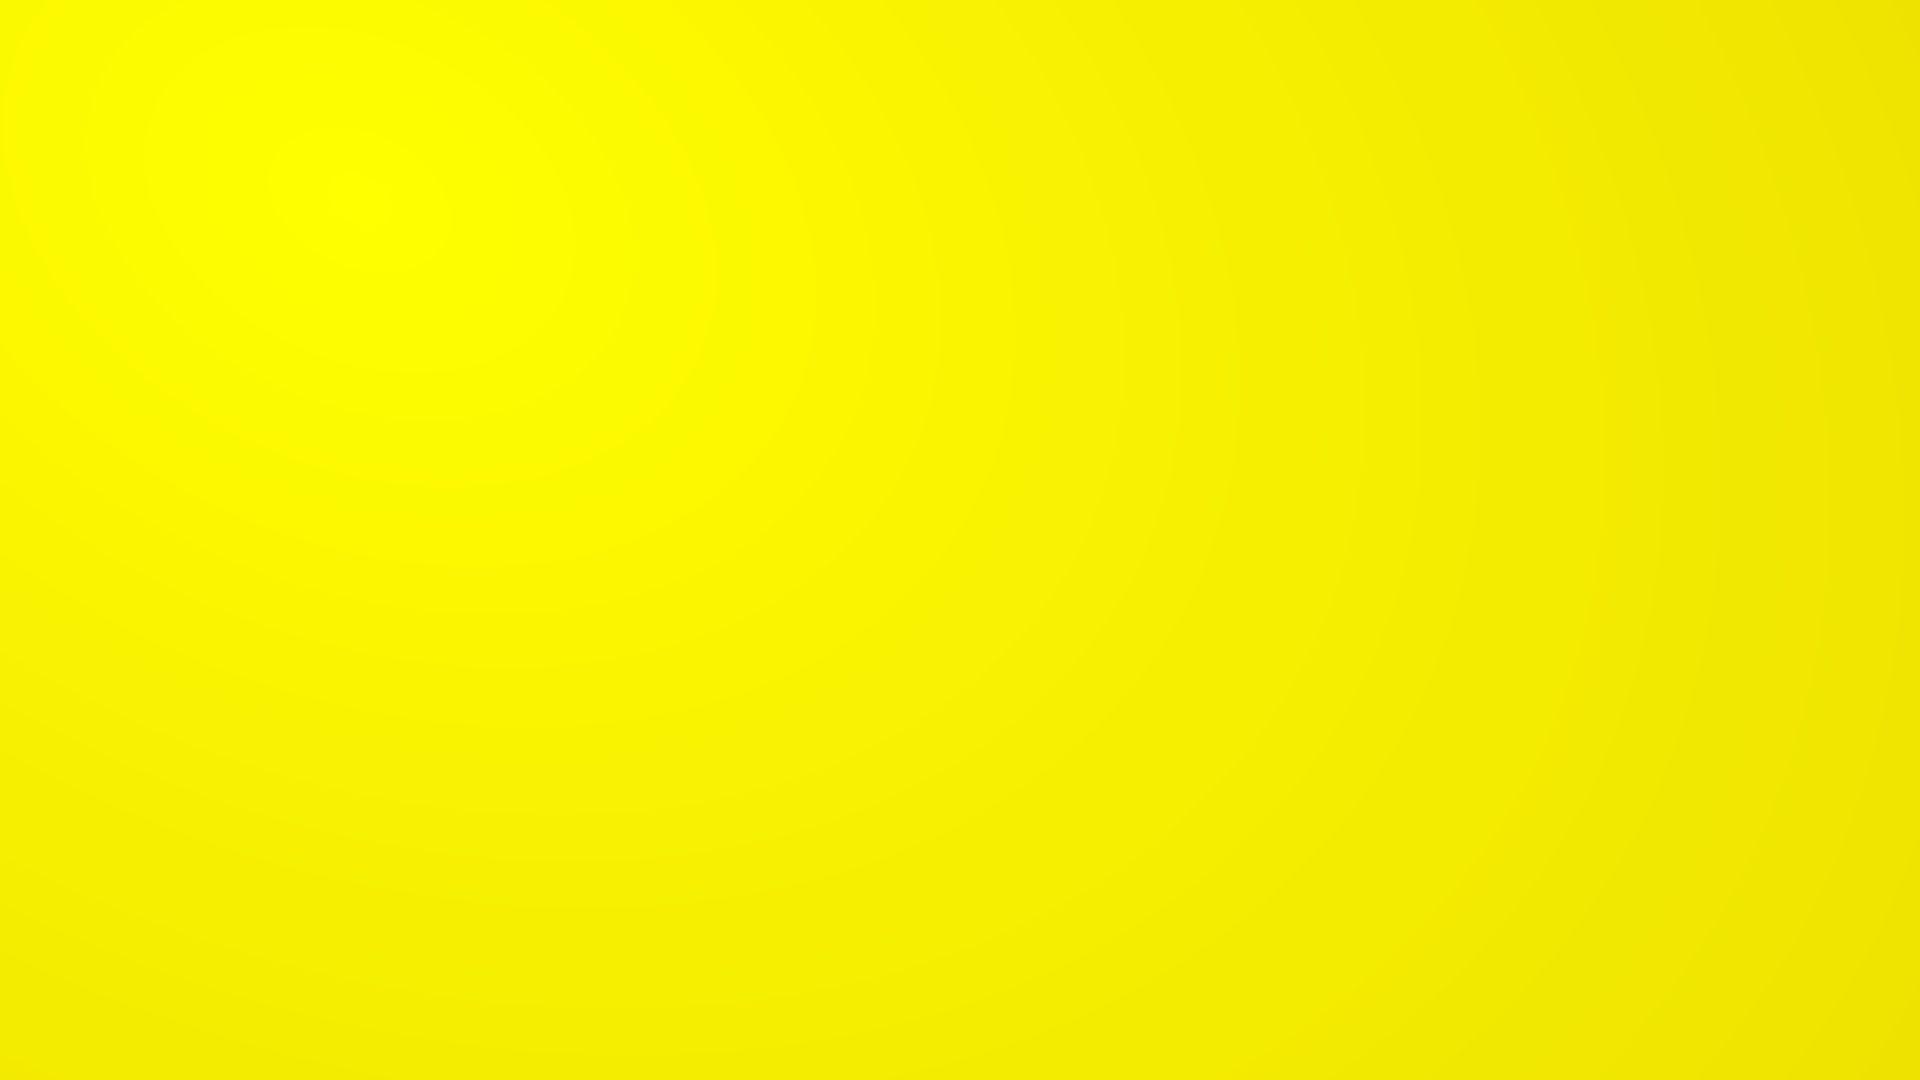 gradient yellow background - TR BAHADURPUR